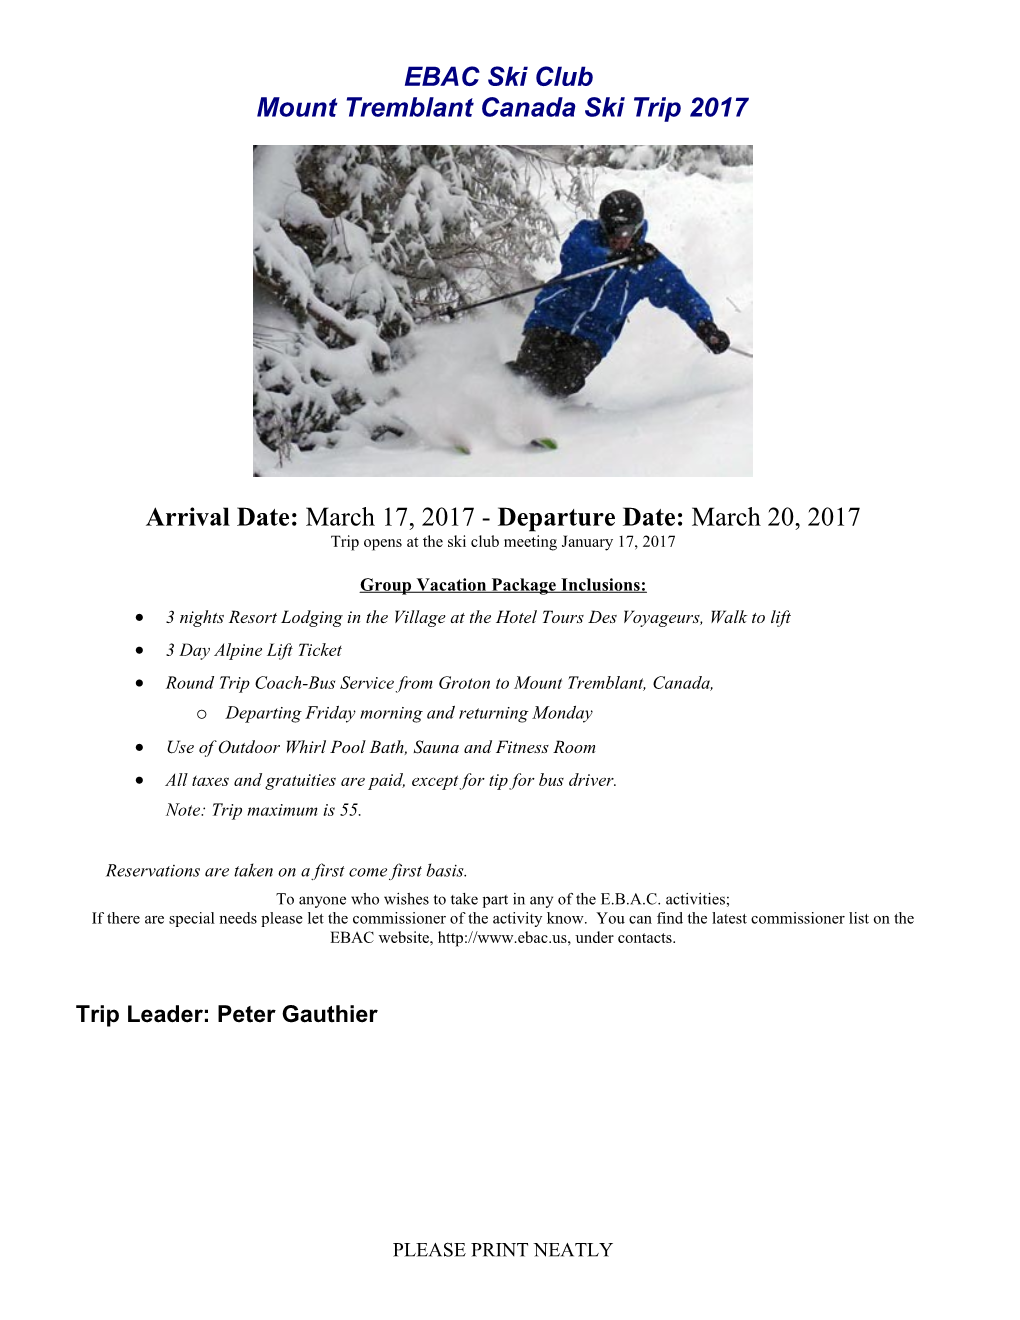 Ebac Ski Club Smugglers' Notch Trip Sign up Sheet Feb 25/26 28, 2010